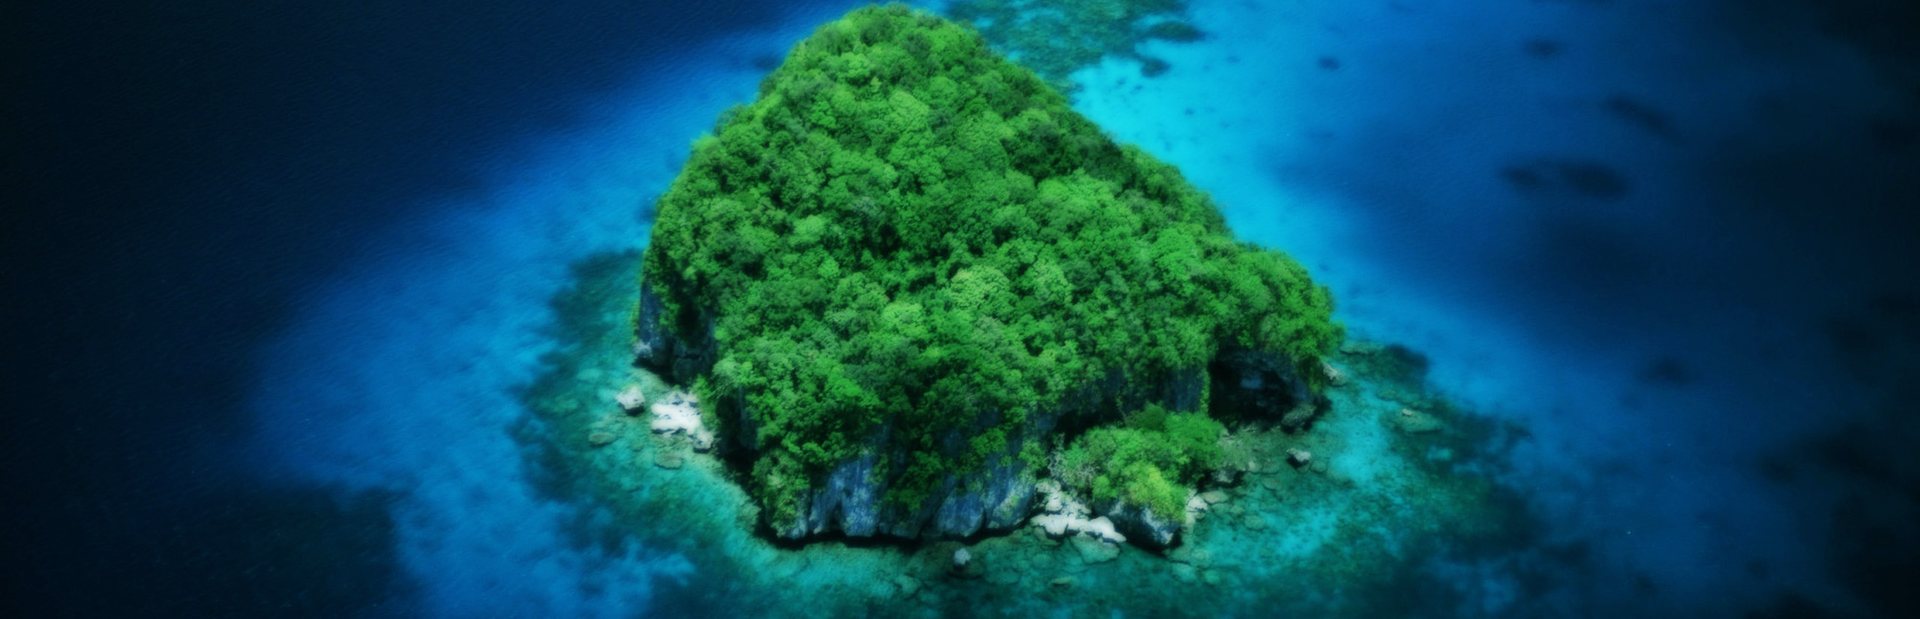 Palau Islands inspiration and tips